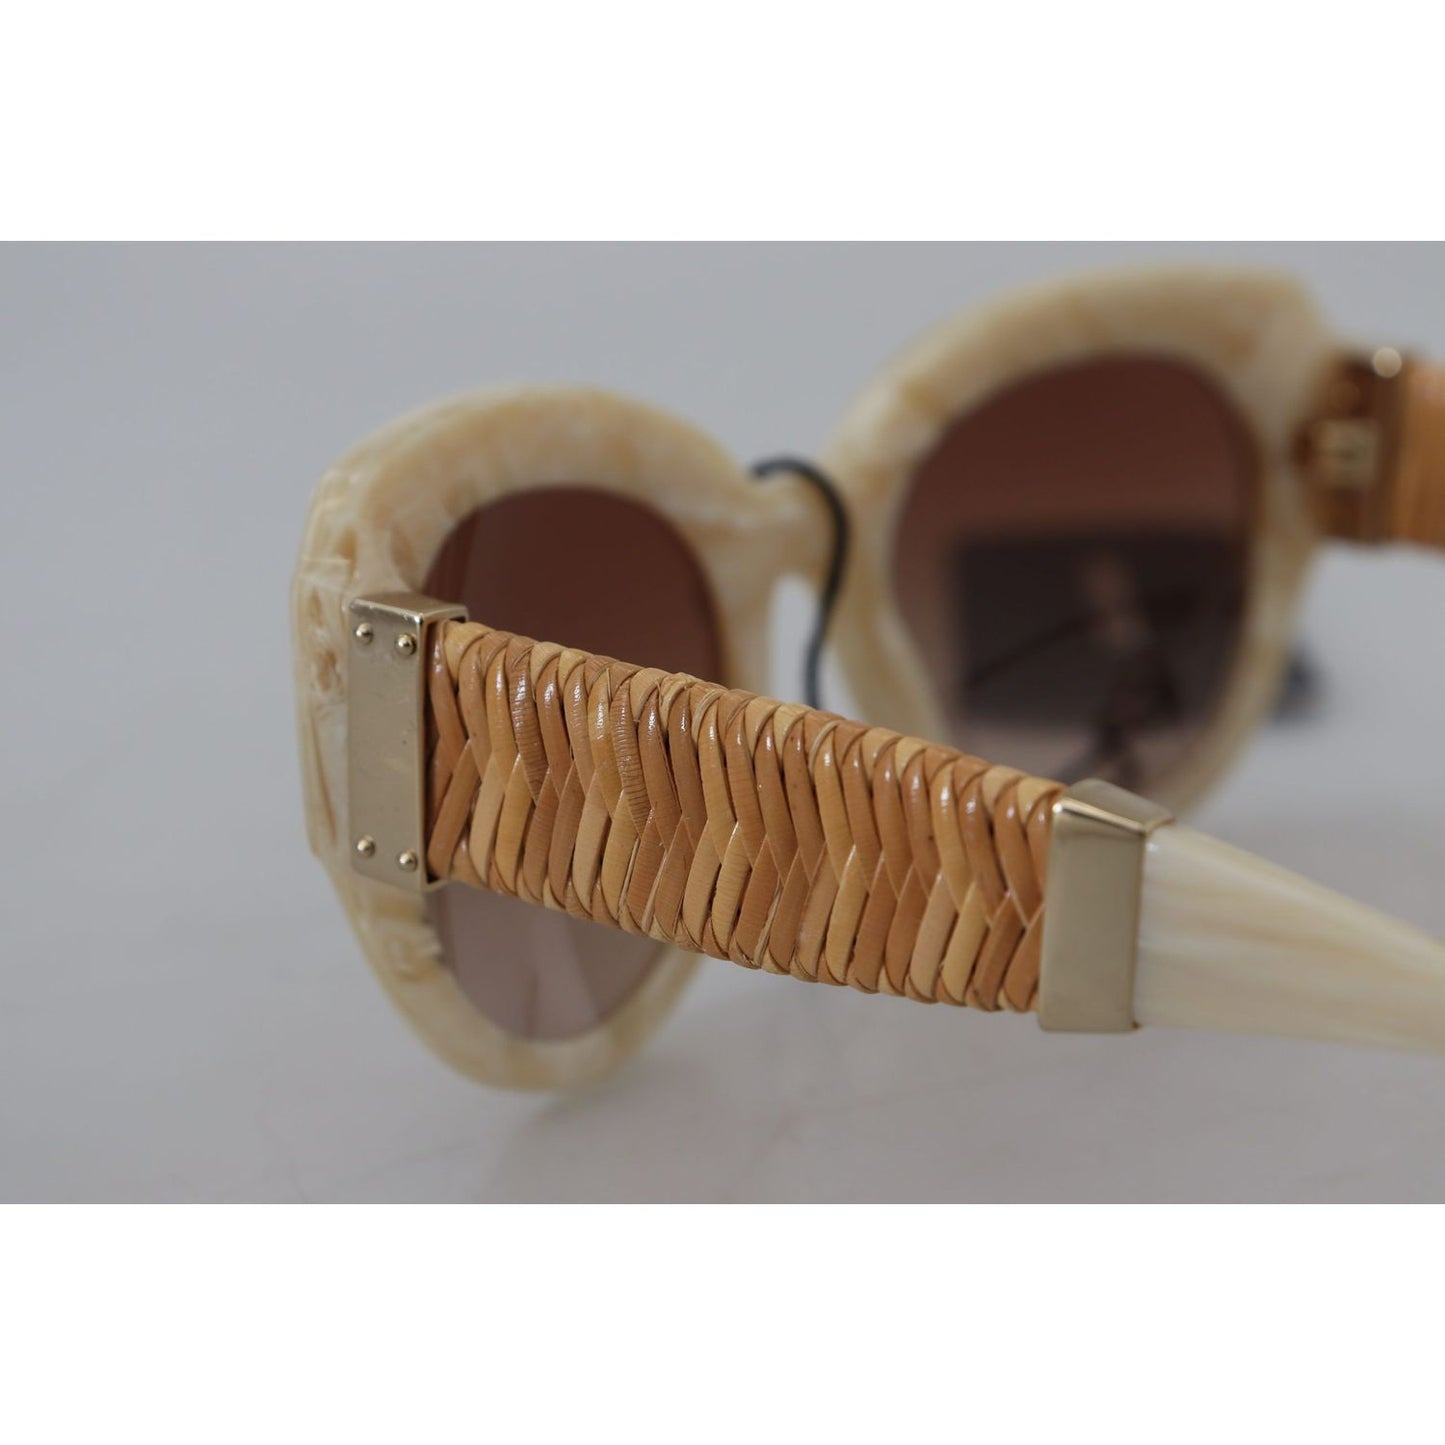 Dolce & Gabbana Beige Chic Acetate Women's Sunglasses beige-acetate-full-rim-brown-lense-dg4294-sunglasses IMG_4313-1-scaled-89745df6-44c.jpg